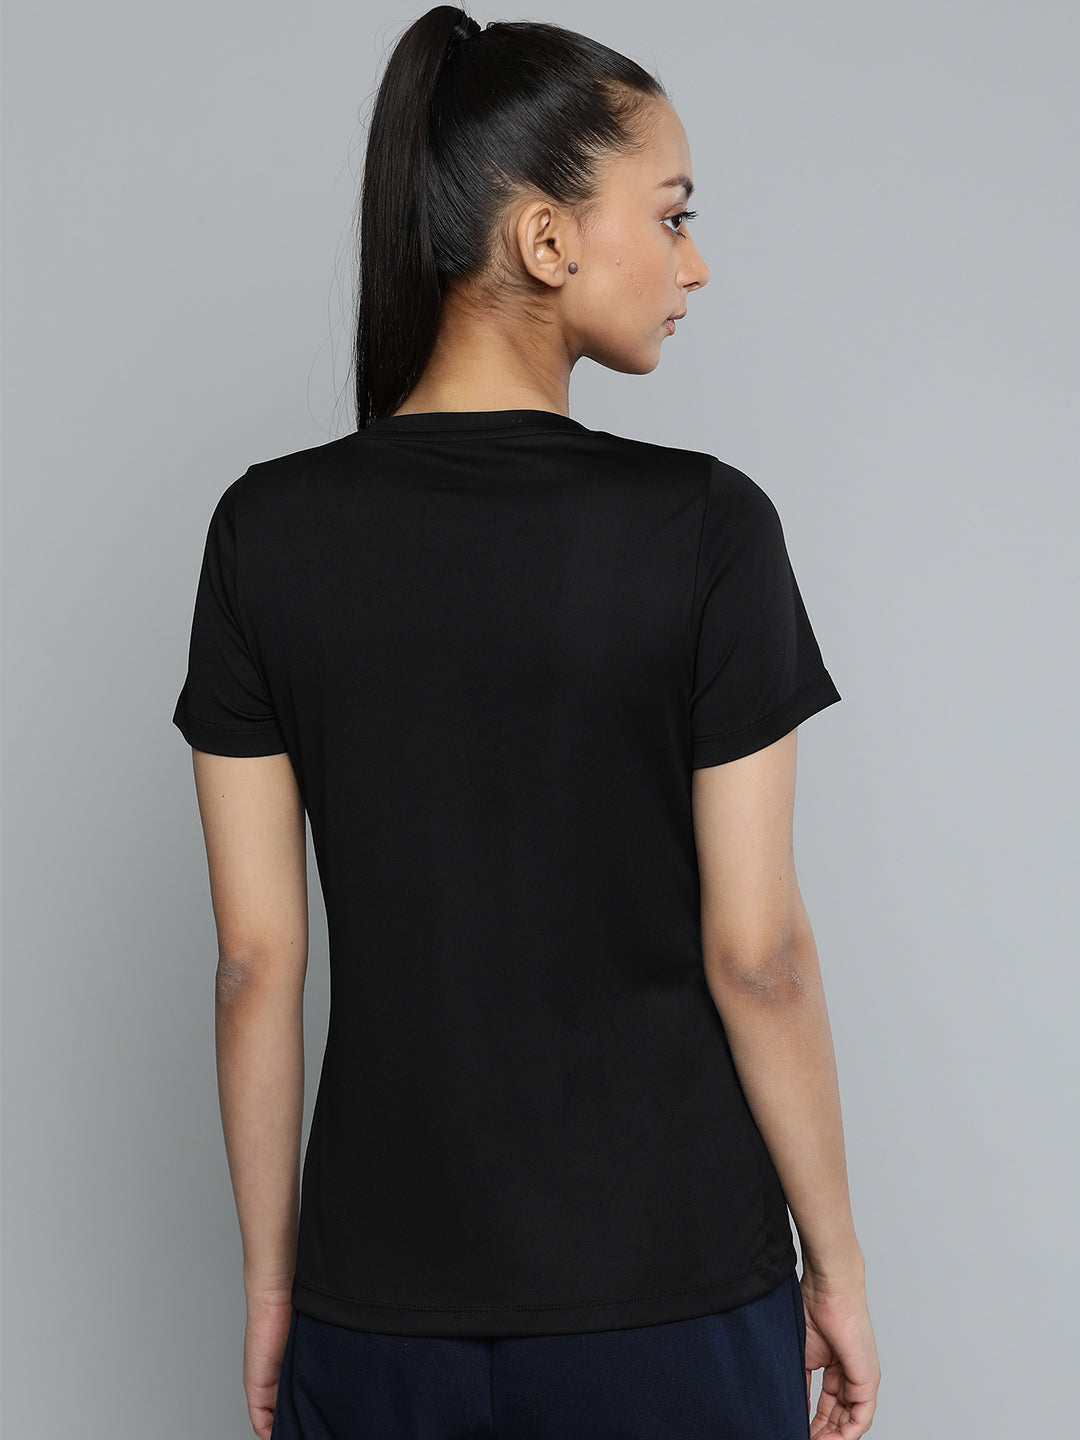 Alcis Women Black Solid Slim Fit Round Neck T-shirt